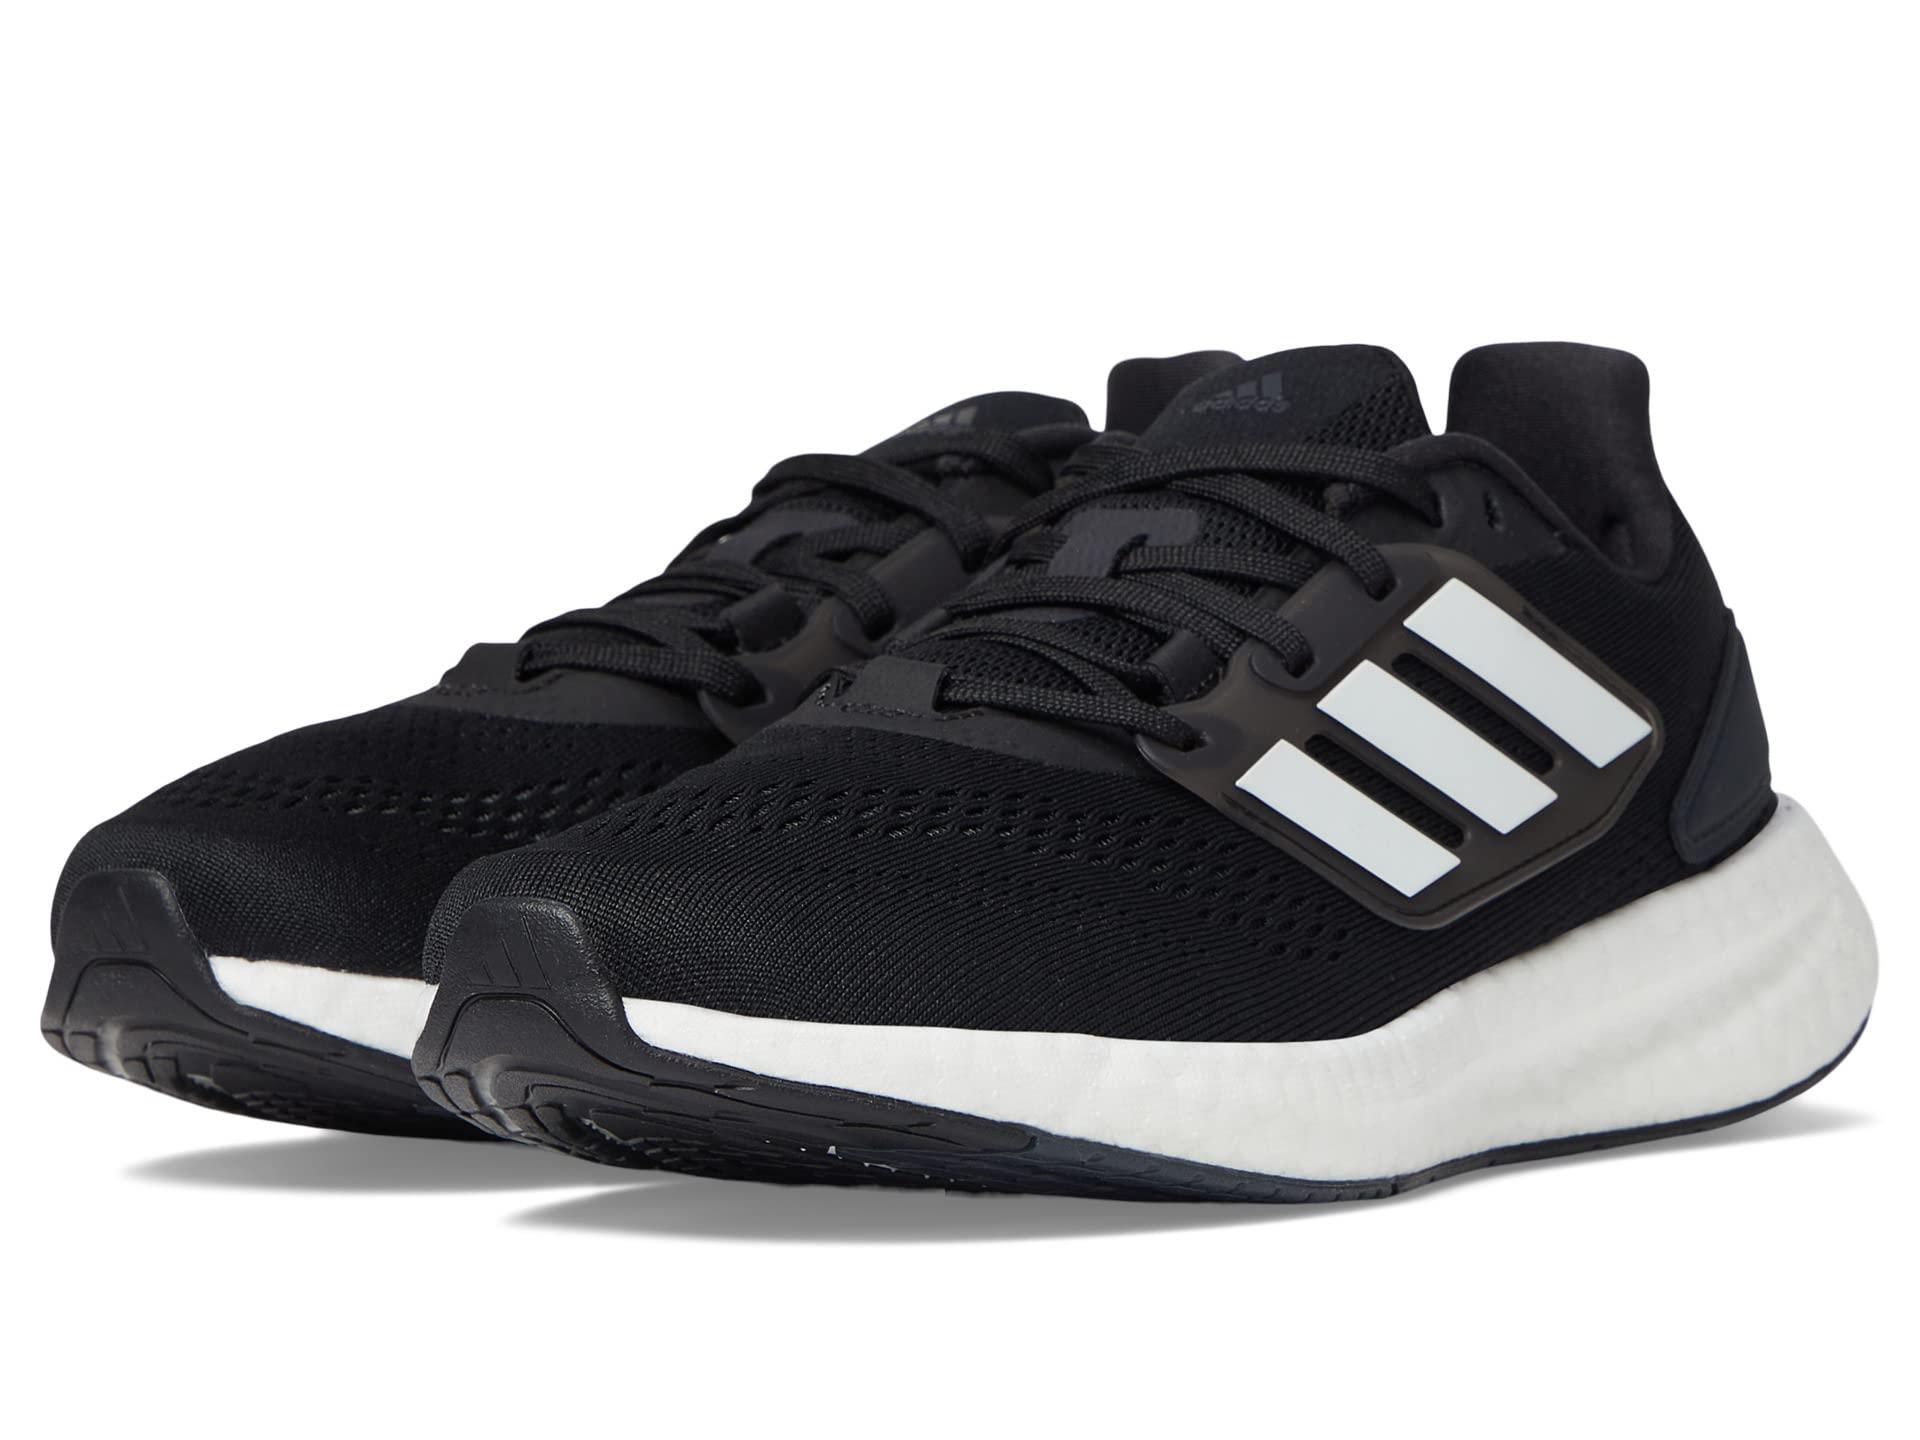 adidas Originals Rubber Pureboost 22 Running Shoe in Black/White/Carbon  (Black) - Save 29% | Lyst